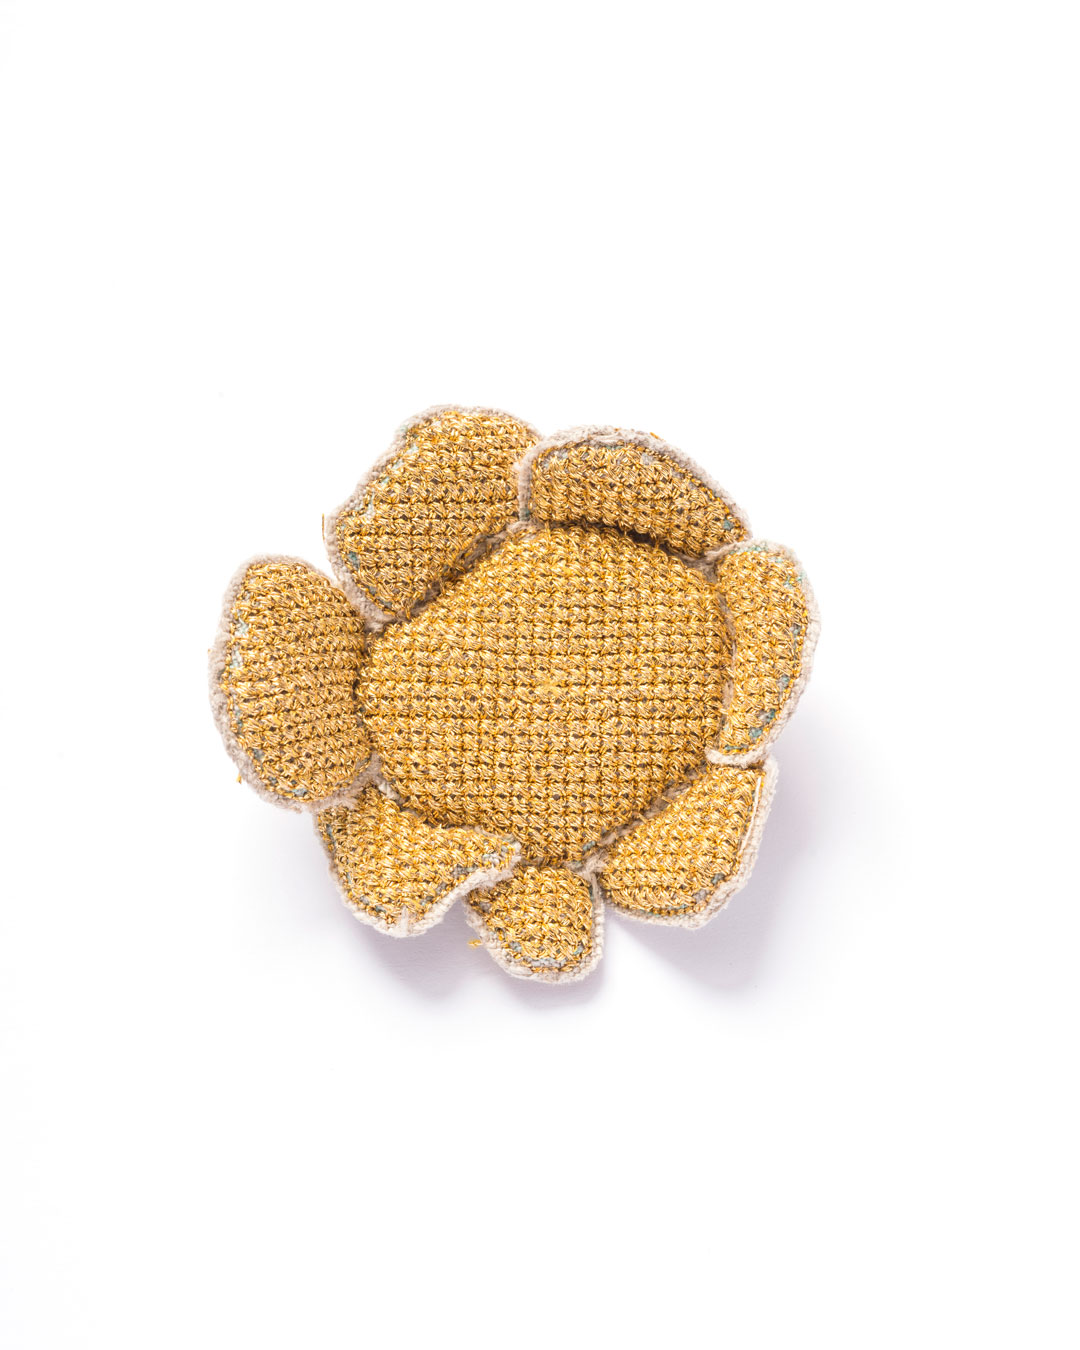 Carla Nuis, Golden Cuddles – Flower Brooch 1 (1/7), 2014, brooch; unbleached linen, 24ct gold kimono thread, linen flax fibres, 80 x 60 x 20 mm, €1100